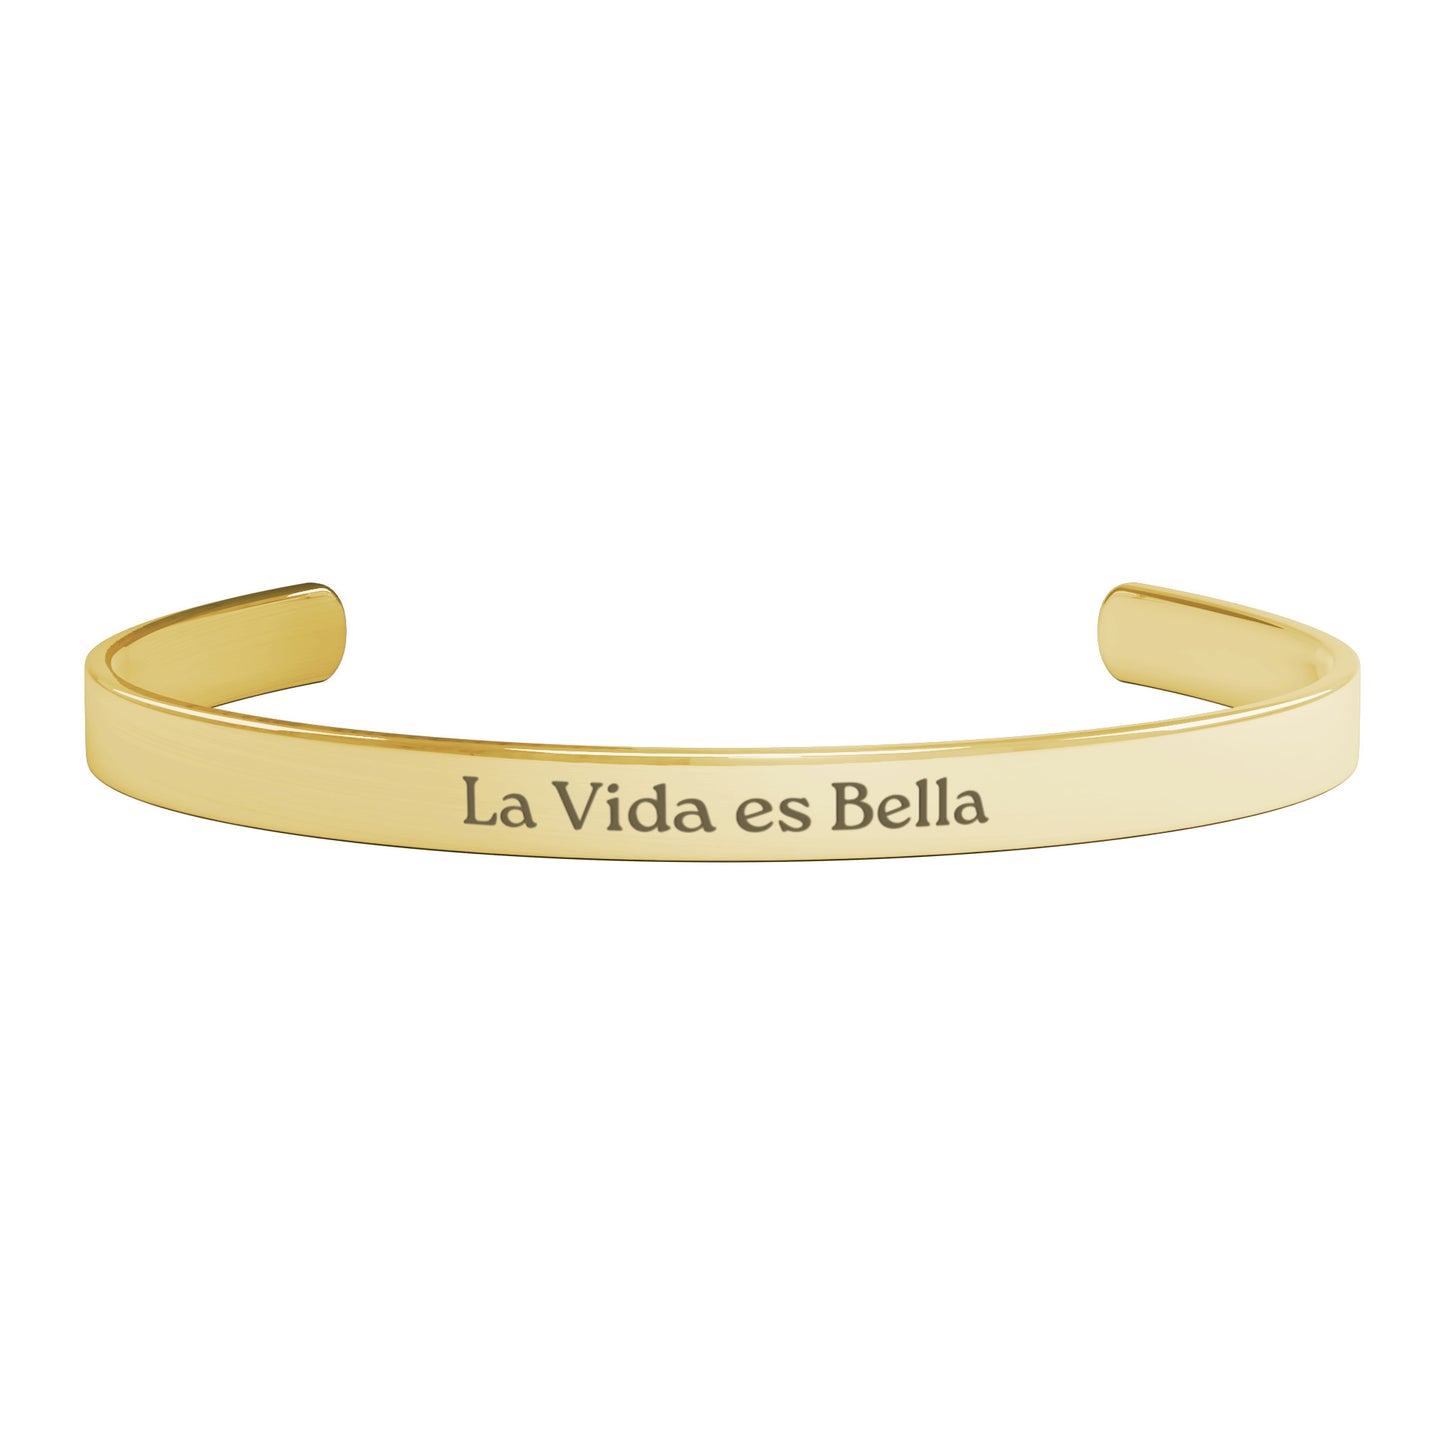 LA VIDA ES BELLA (Spanish- Life is Beautiful)